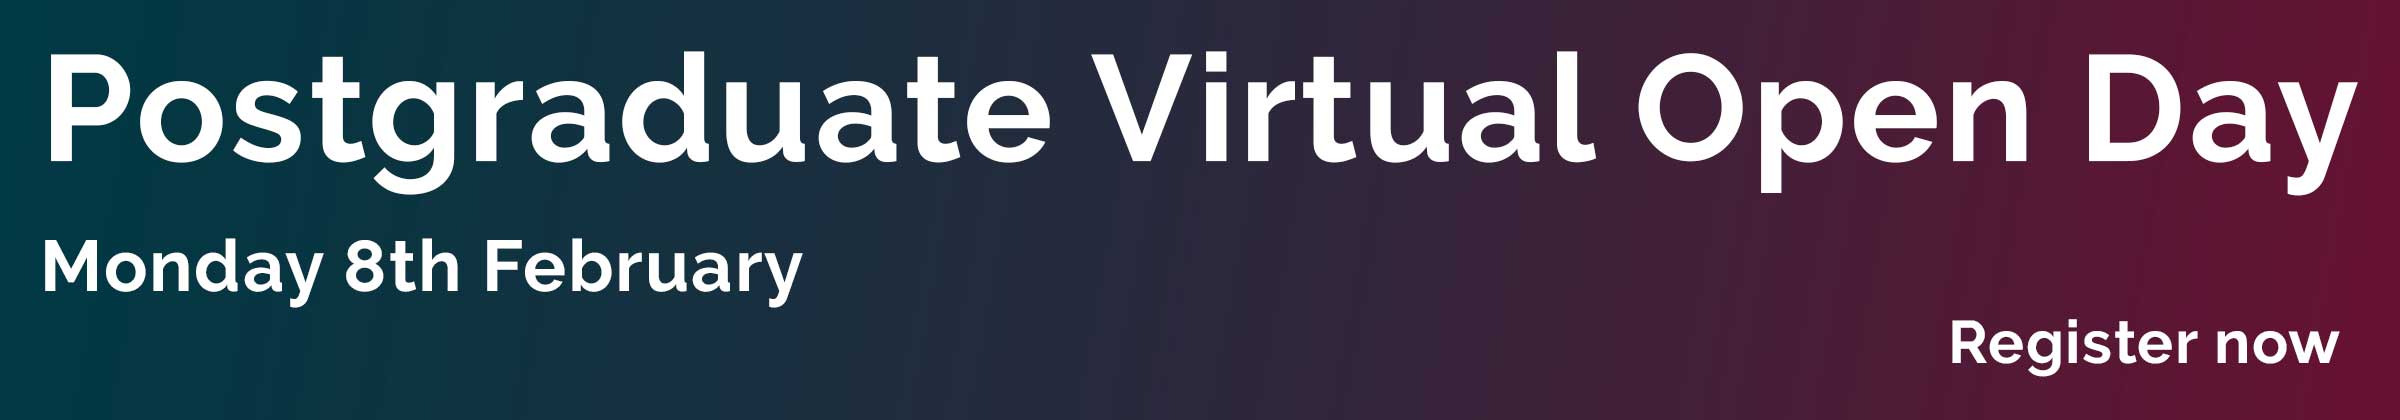 Postgraduate Virtual Open Day 2021 - Monday 8th February